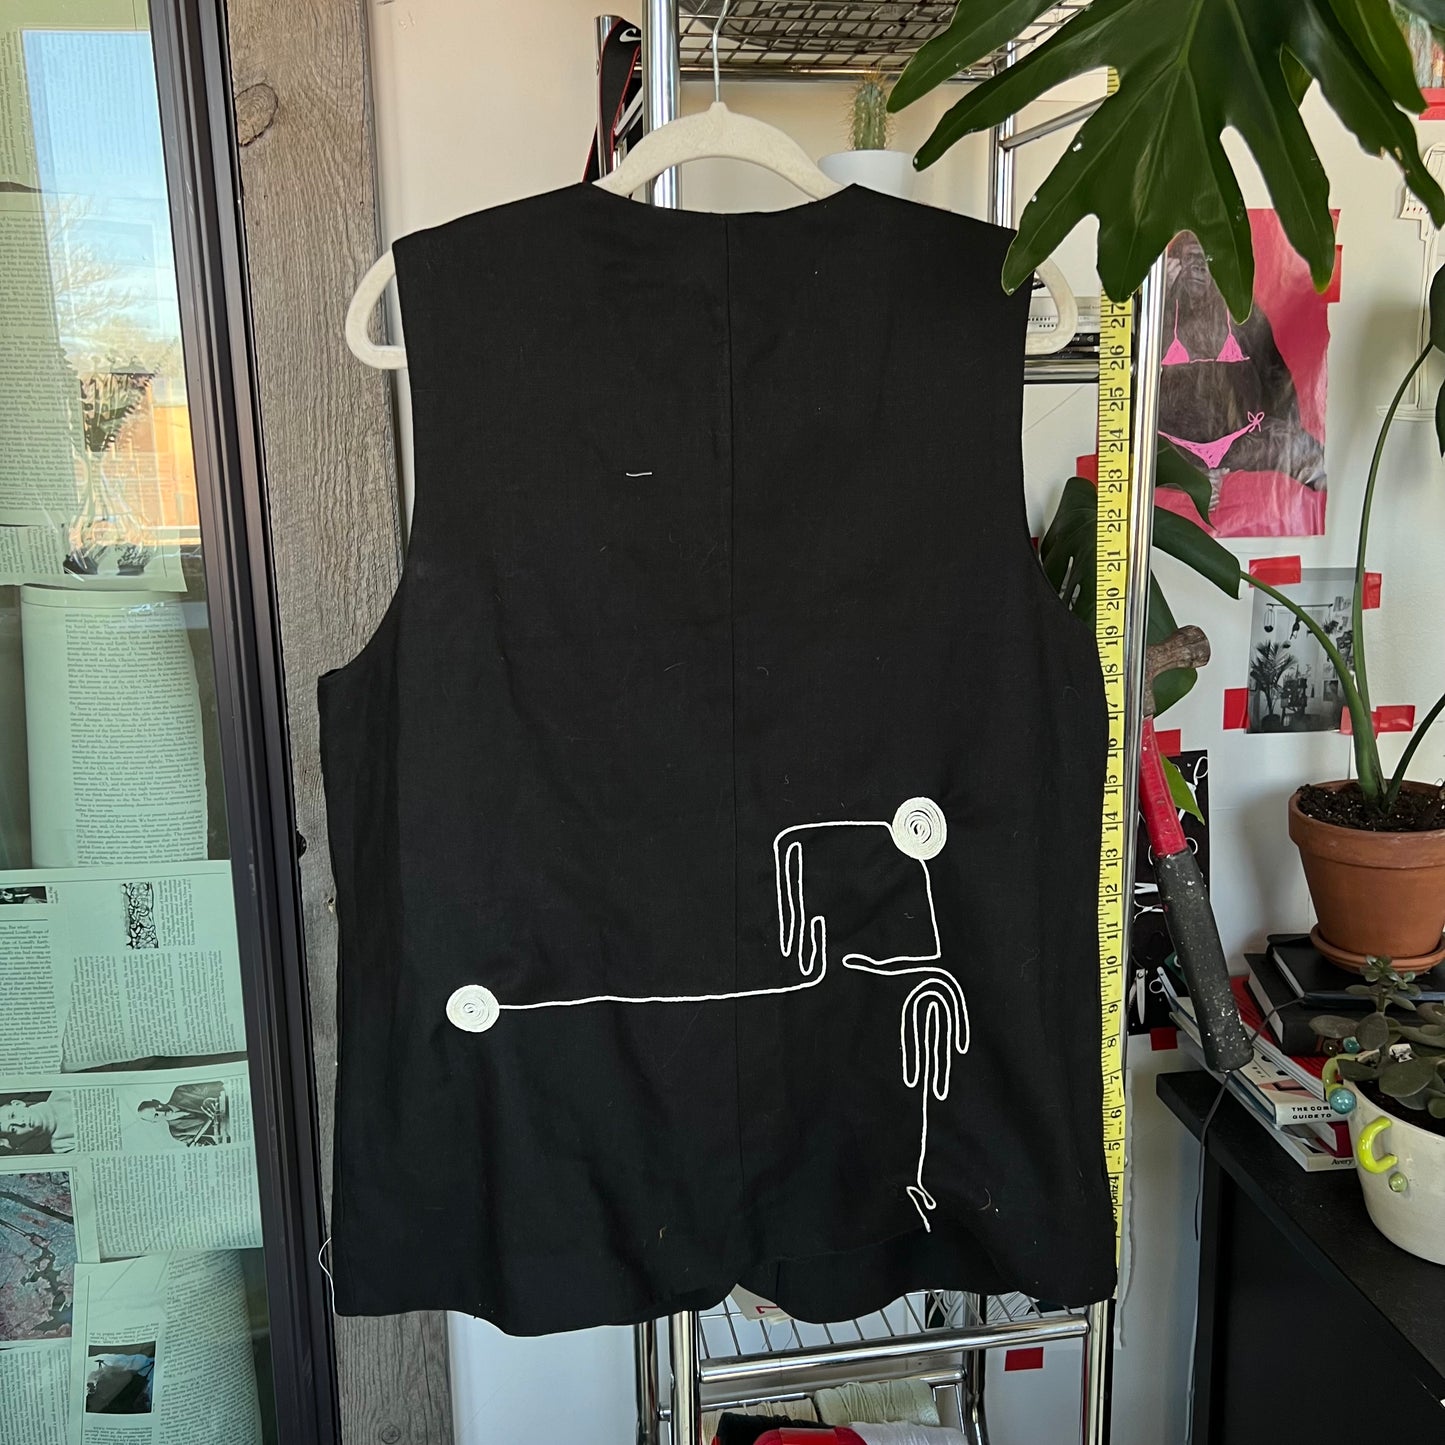 Silly string vest(large)